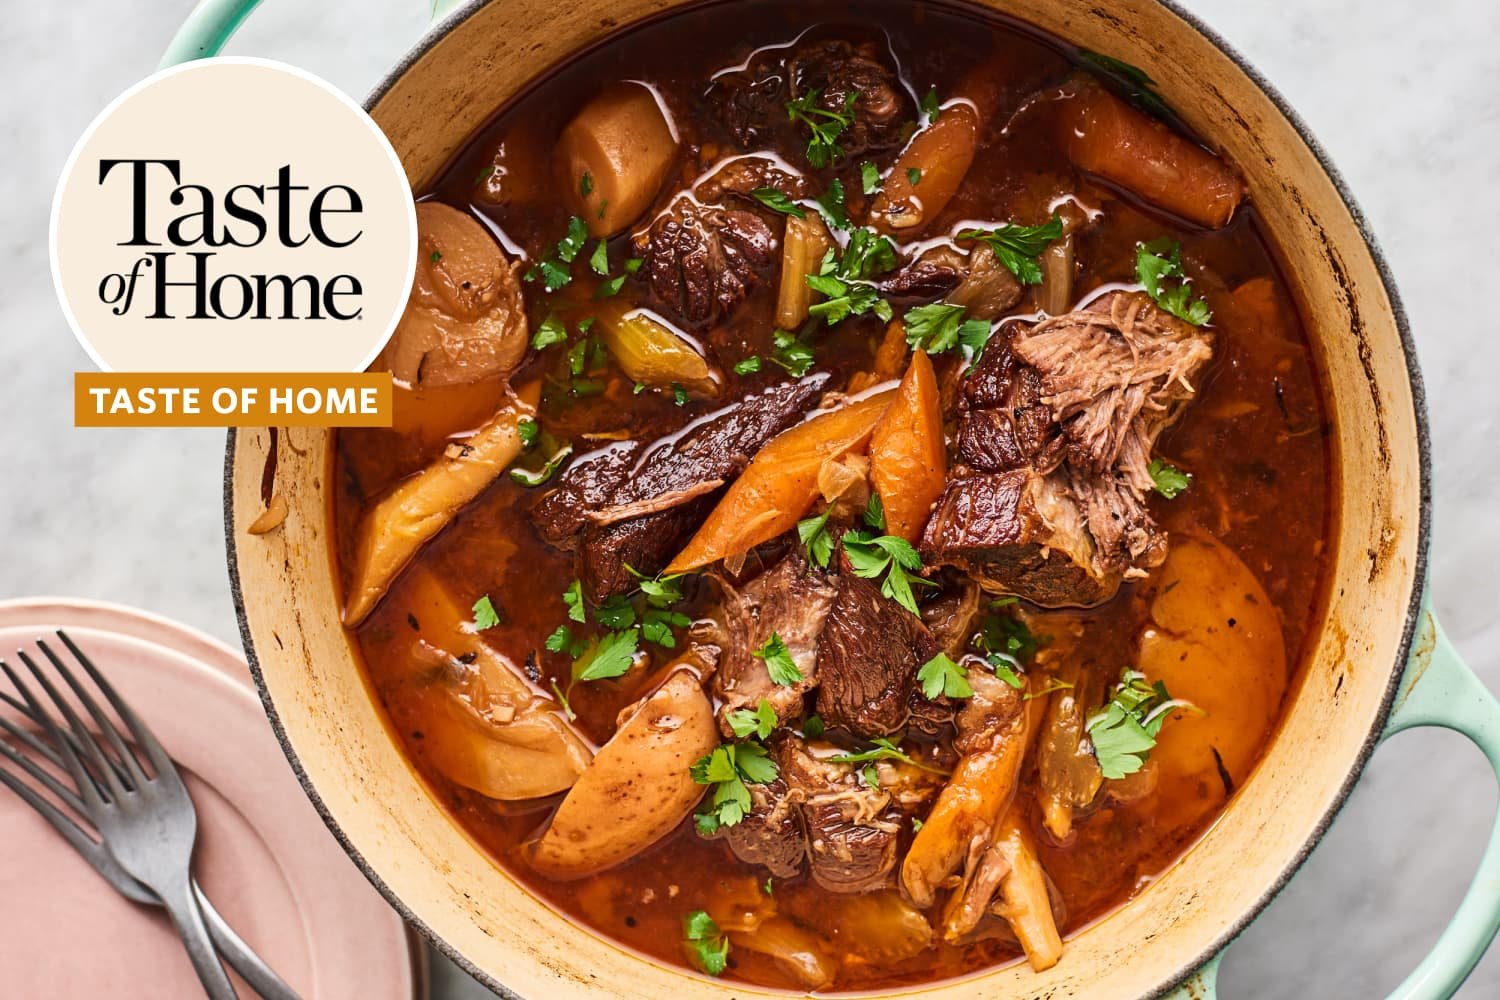 Taste of Home’s “Ultimate” Pot Roast Recipe Is as Good as Promised